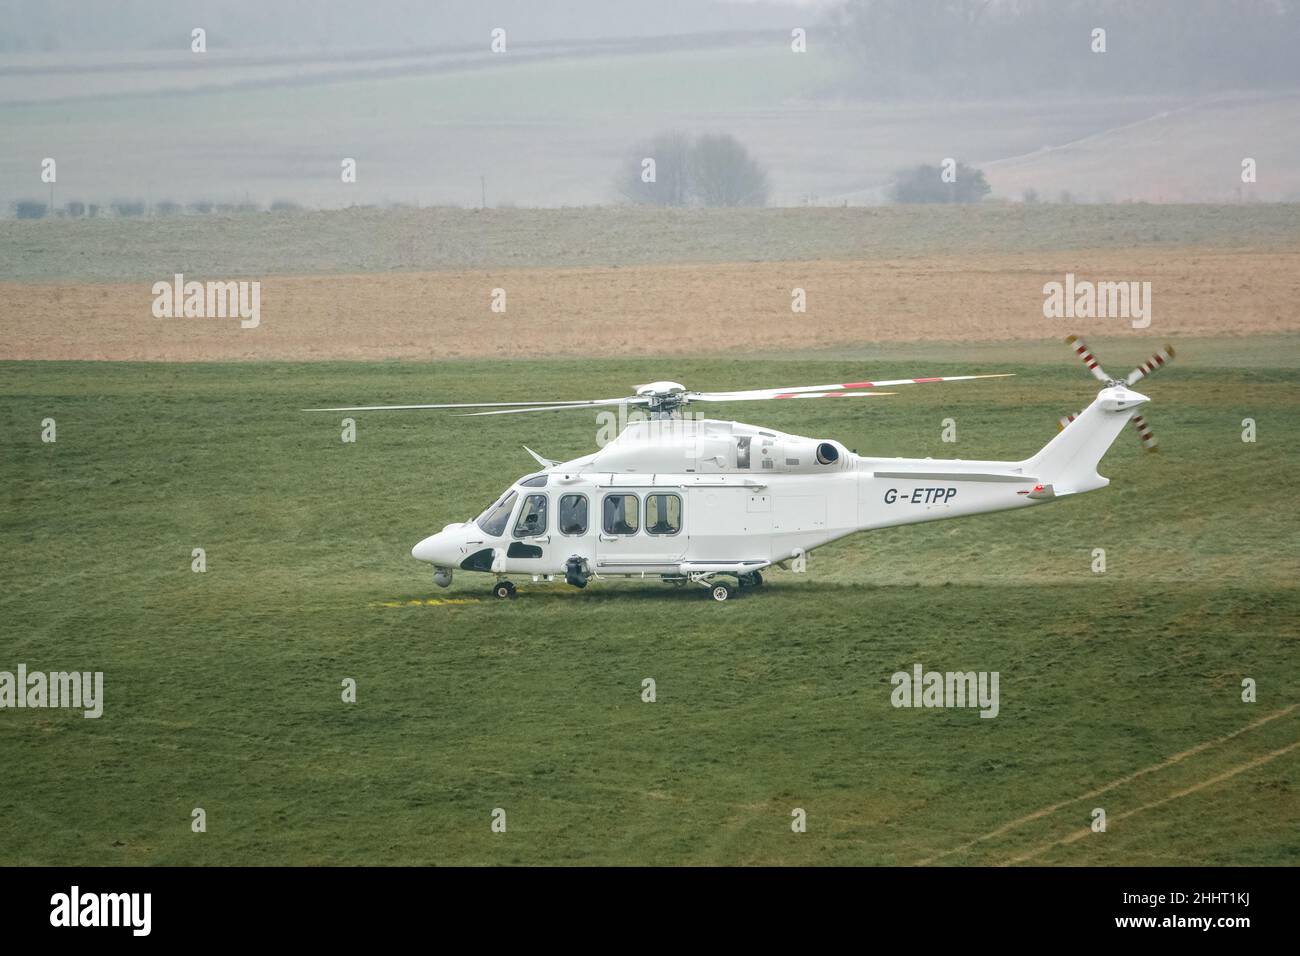 G-ETPP ETPS Agusta AW139 helicopter landing on grass conducting pilot training flight exercise Stock Photo